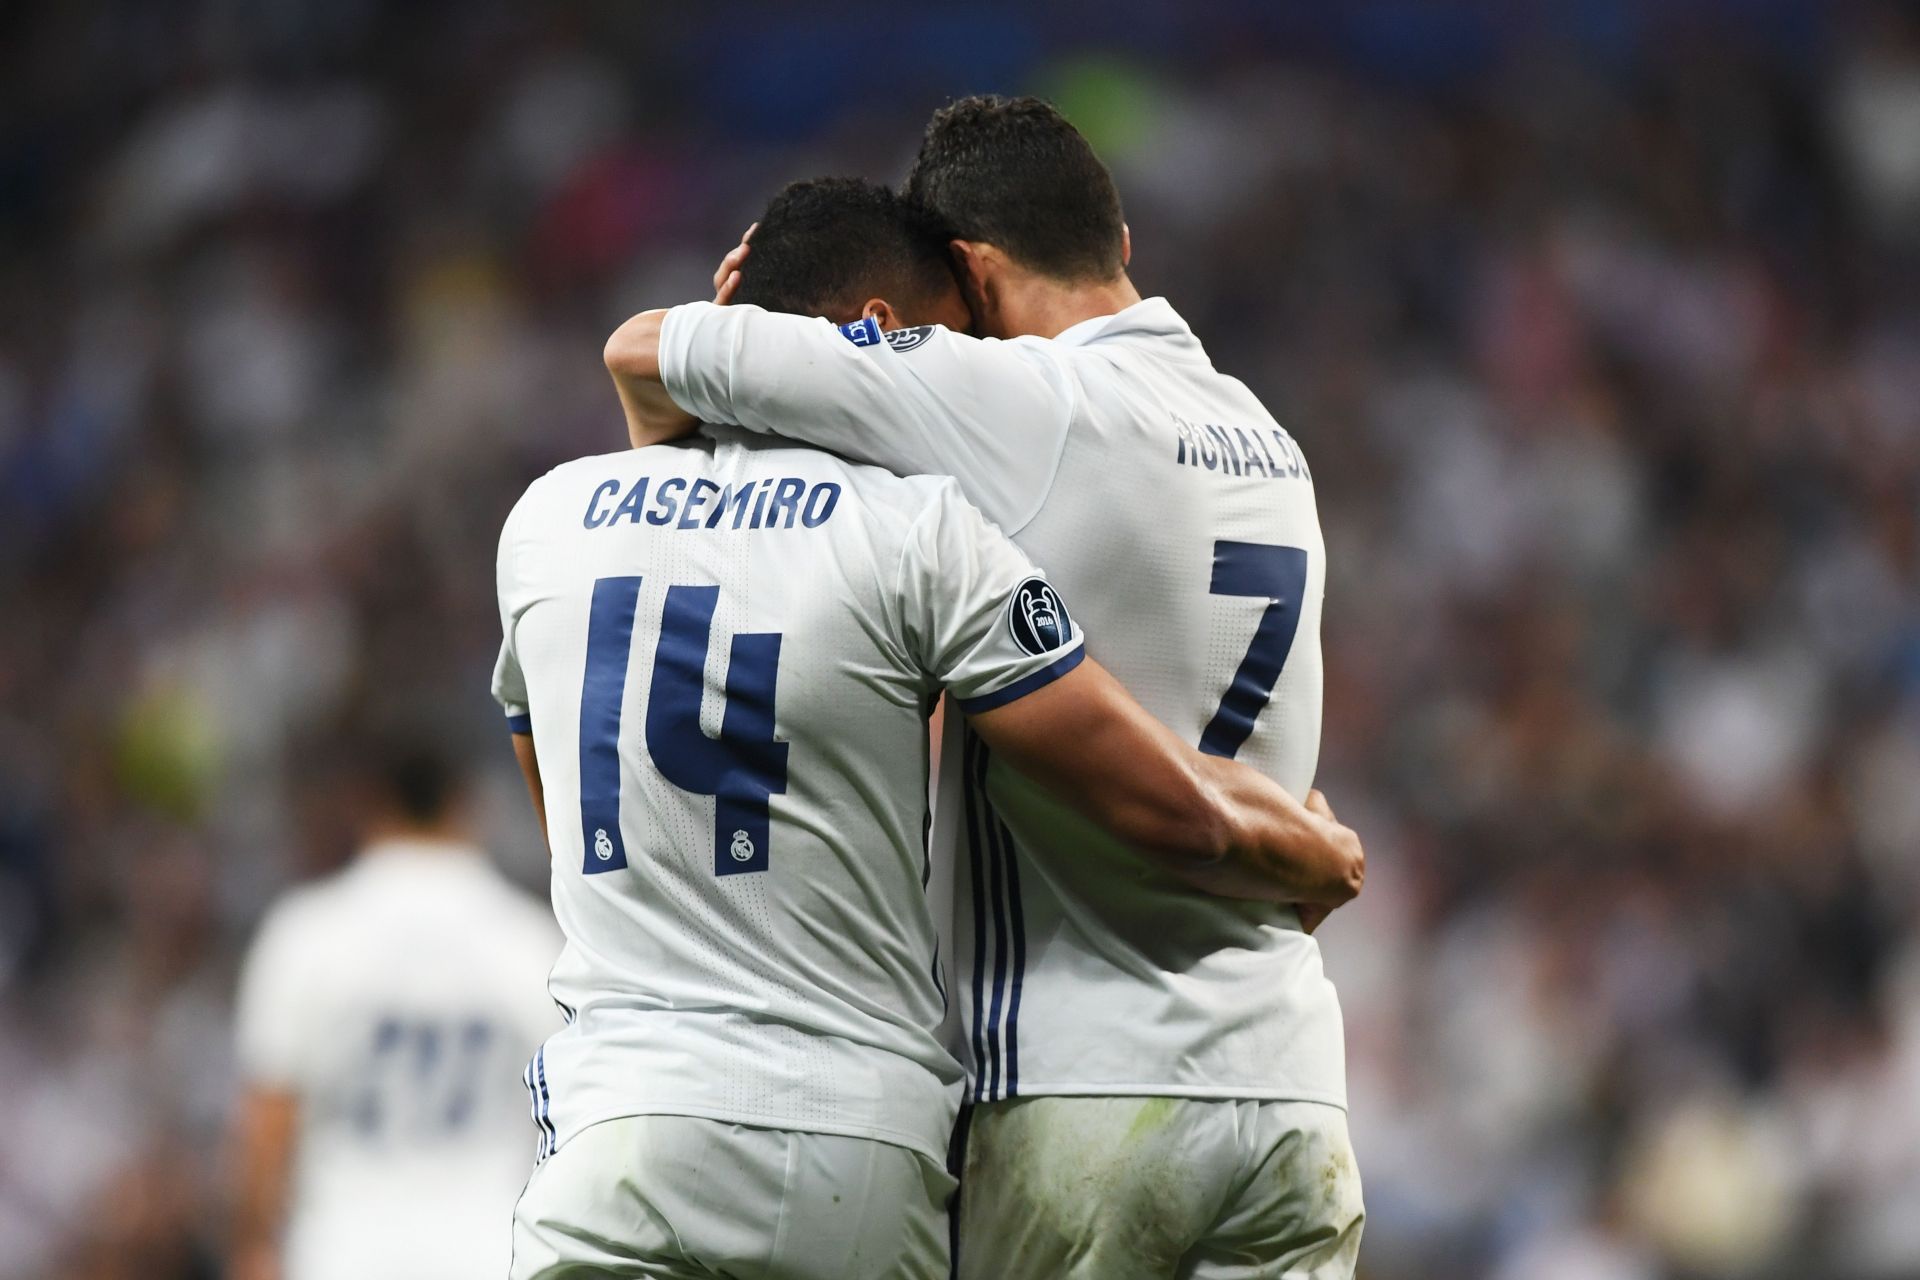 Casemiro and Cristiano Ronaldo are longtime teammates.